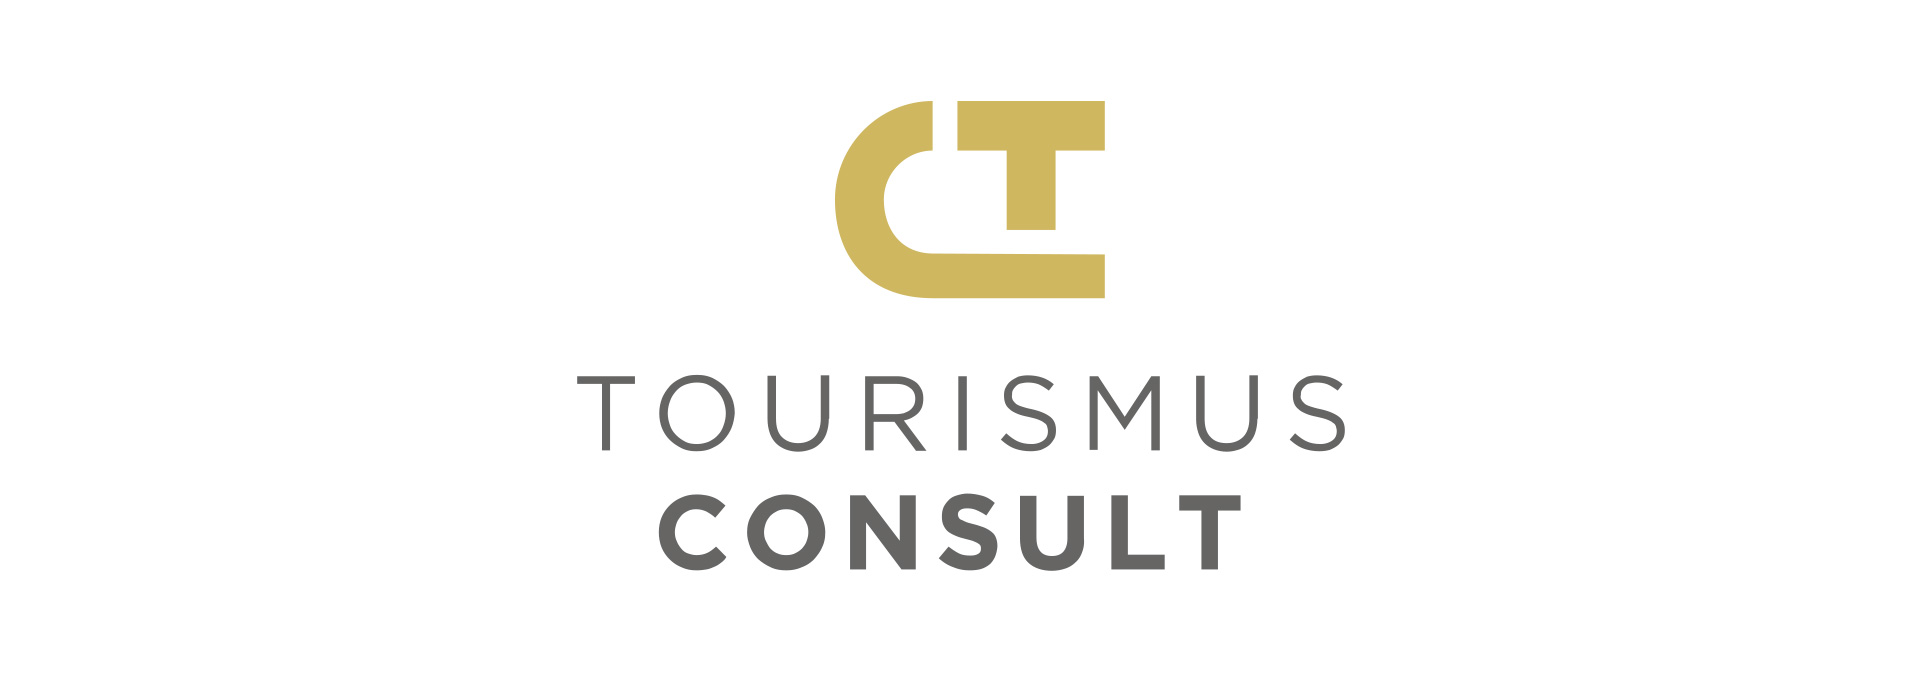 tc-logo-rebranding